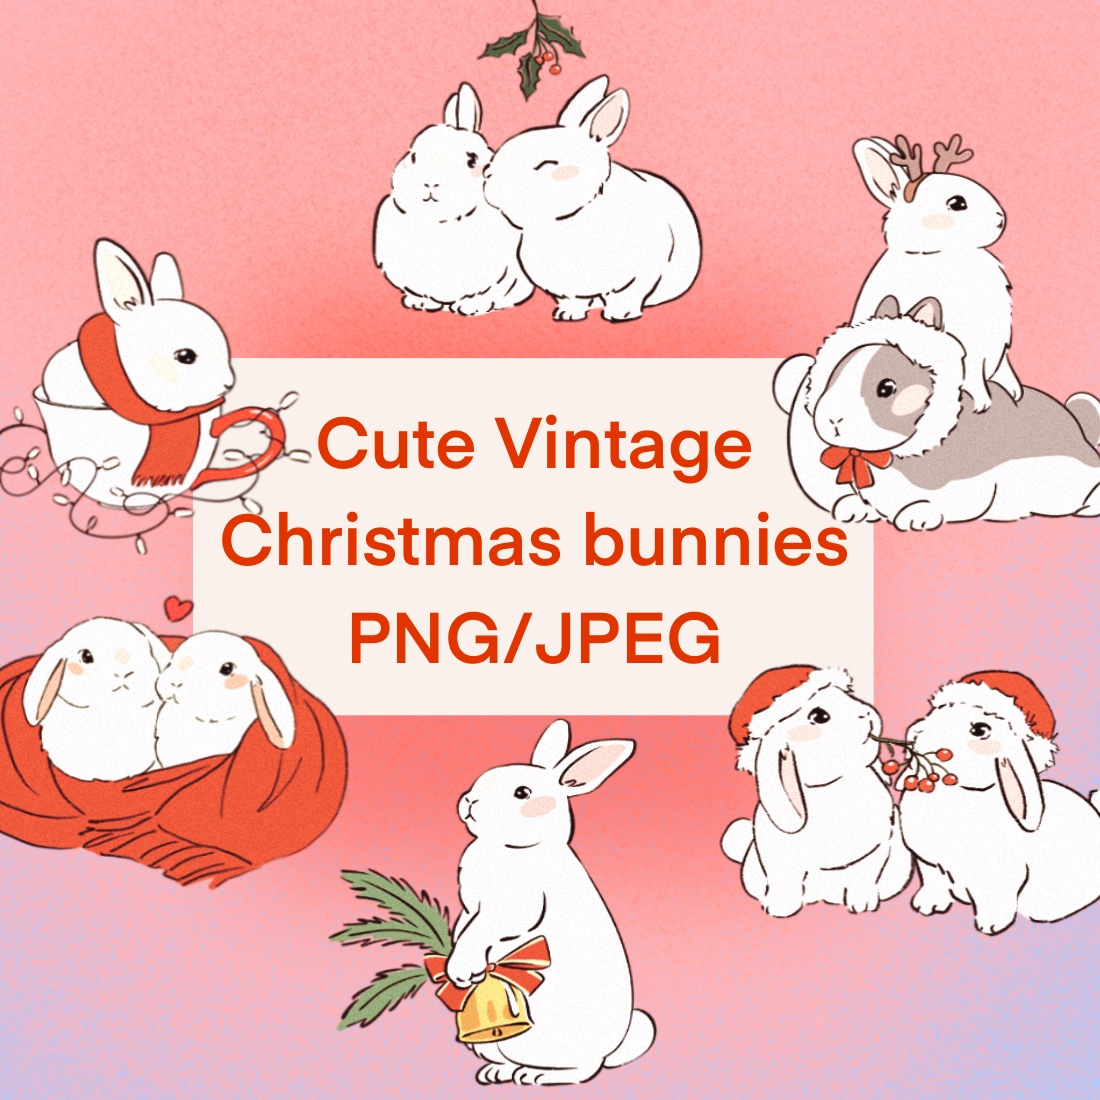 Christmas Cute Vintage Rabbit Print Drawings cover image.